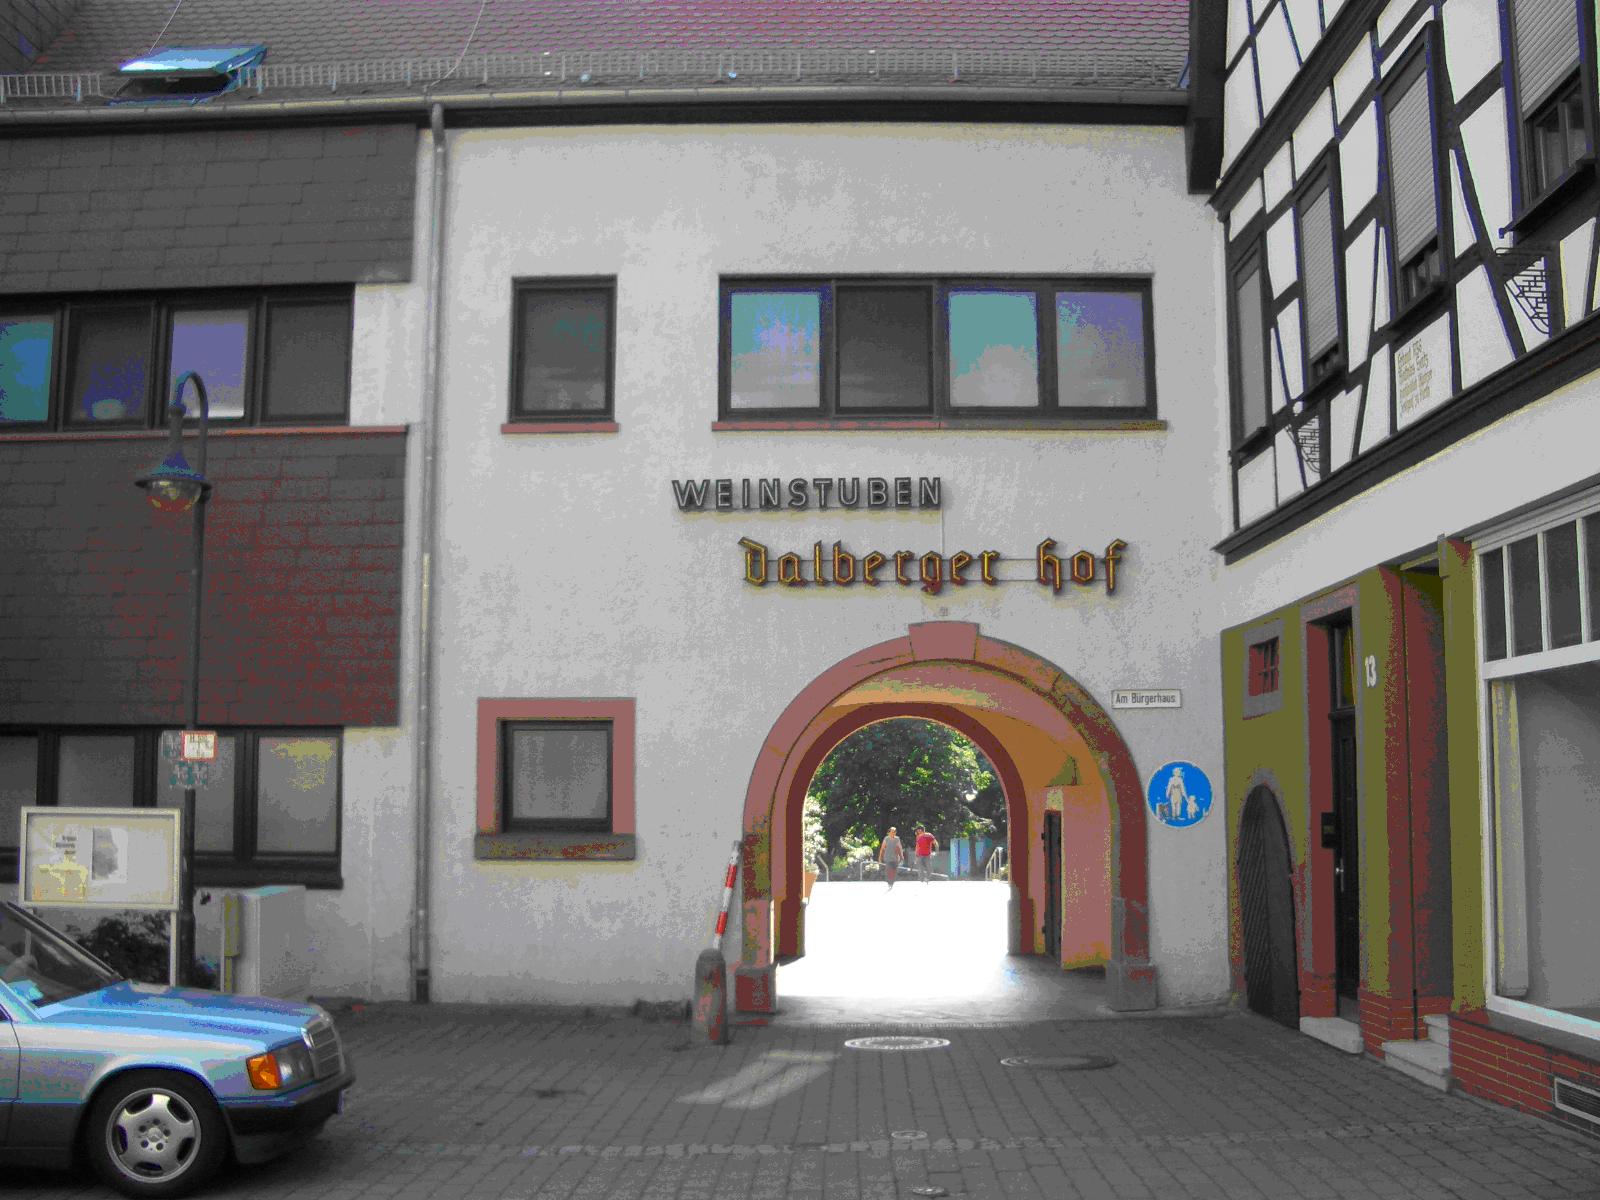 Ziele in der Innenstadt: Dalberger Hof